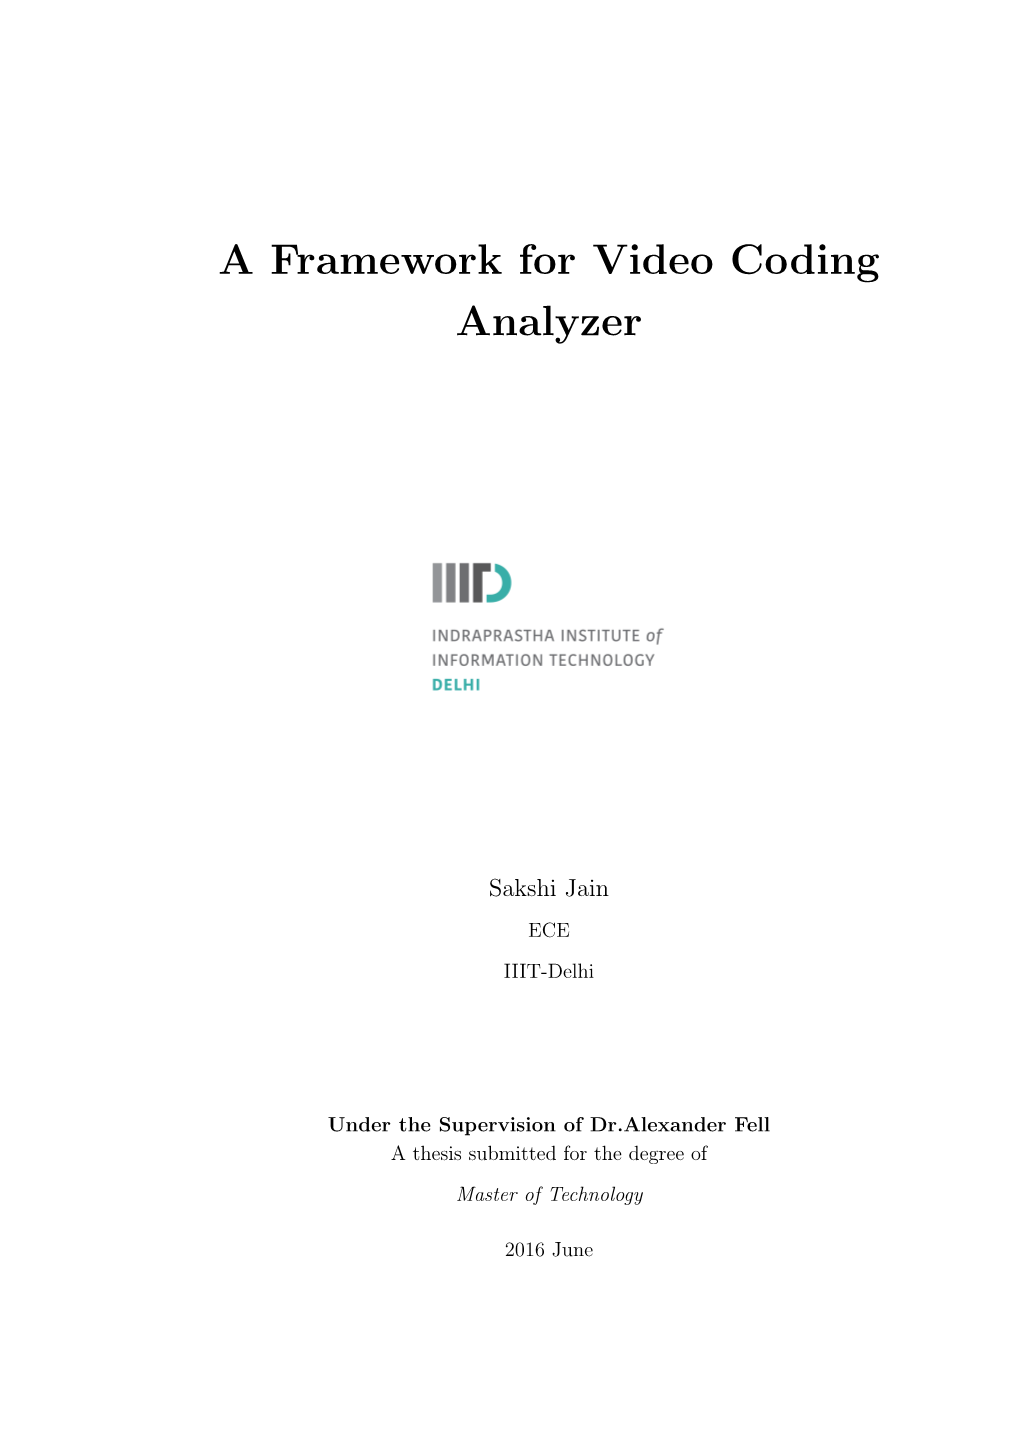 A Framework for Video Coding Analyzer